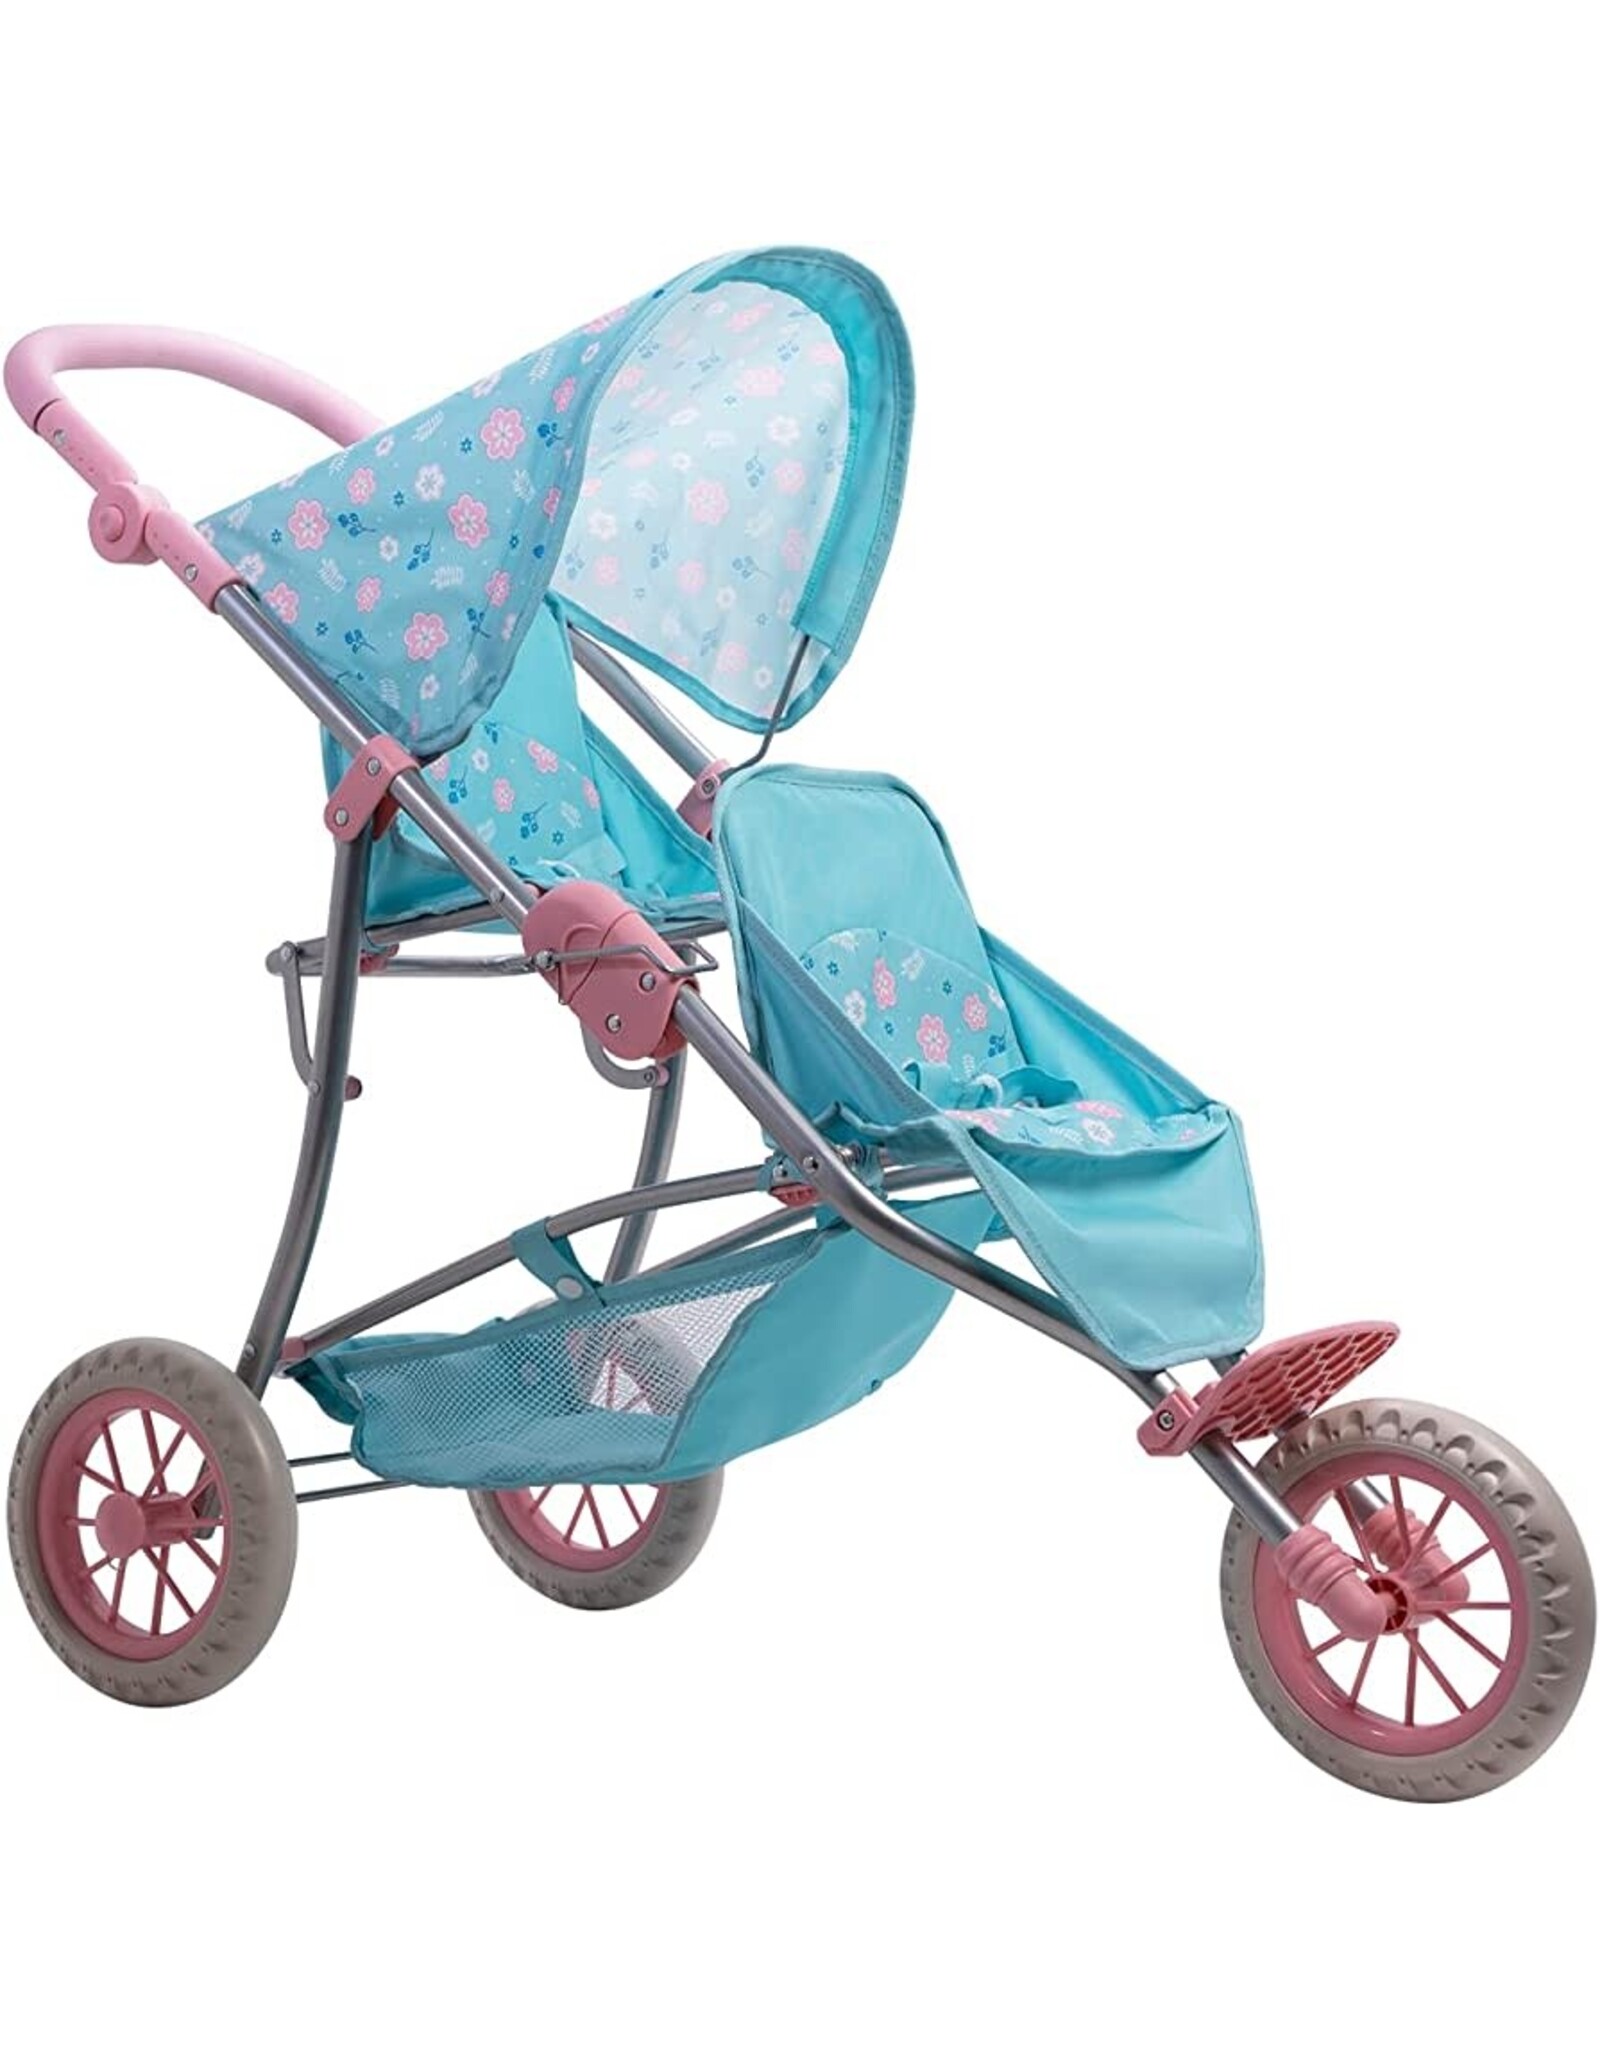 Adora Twin Jogger Baby Doll Stroller - Flower Power